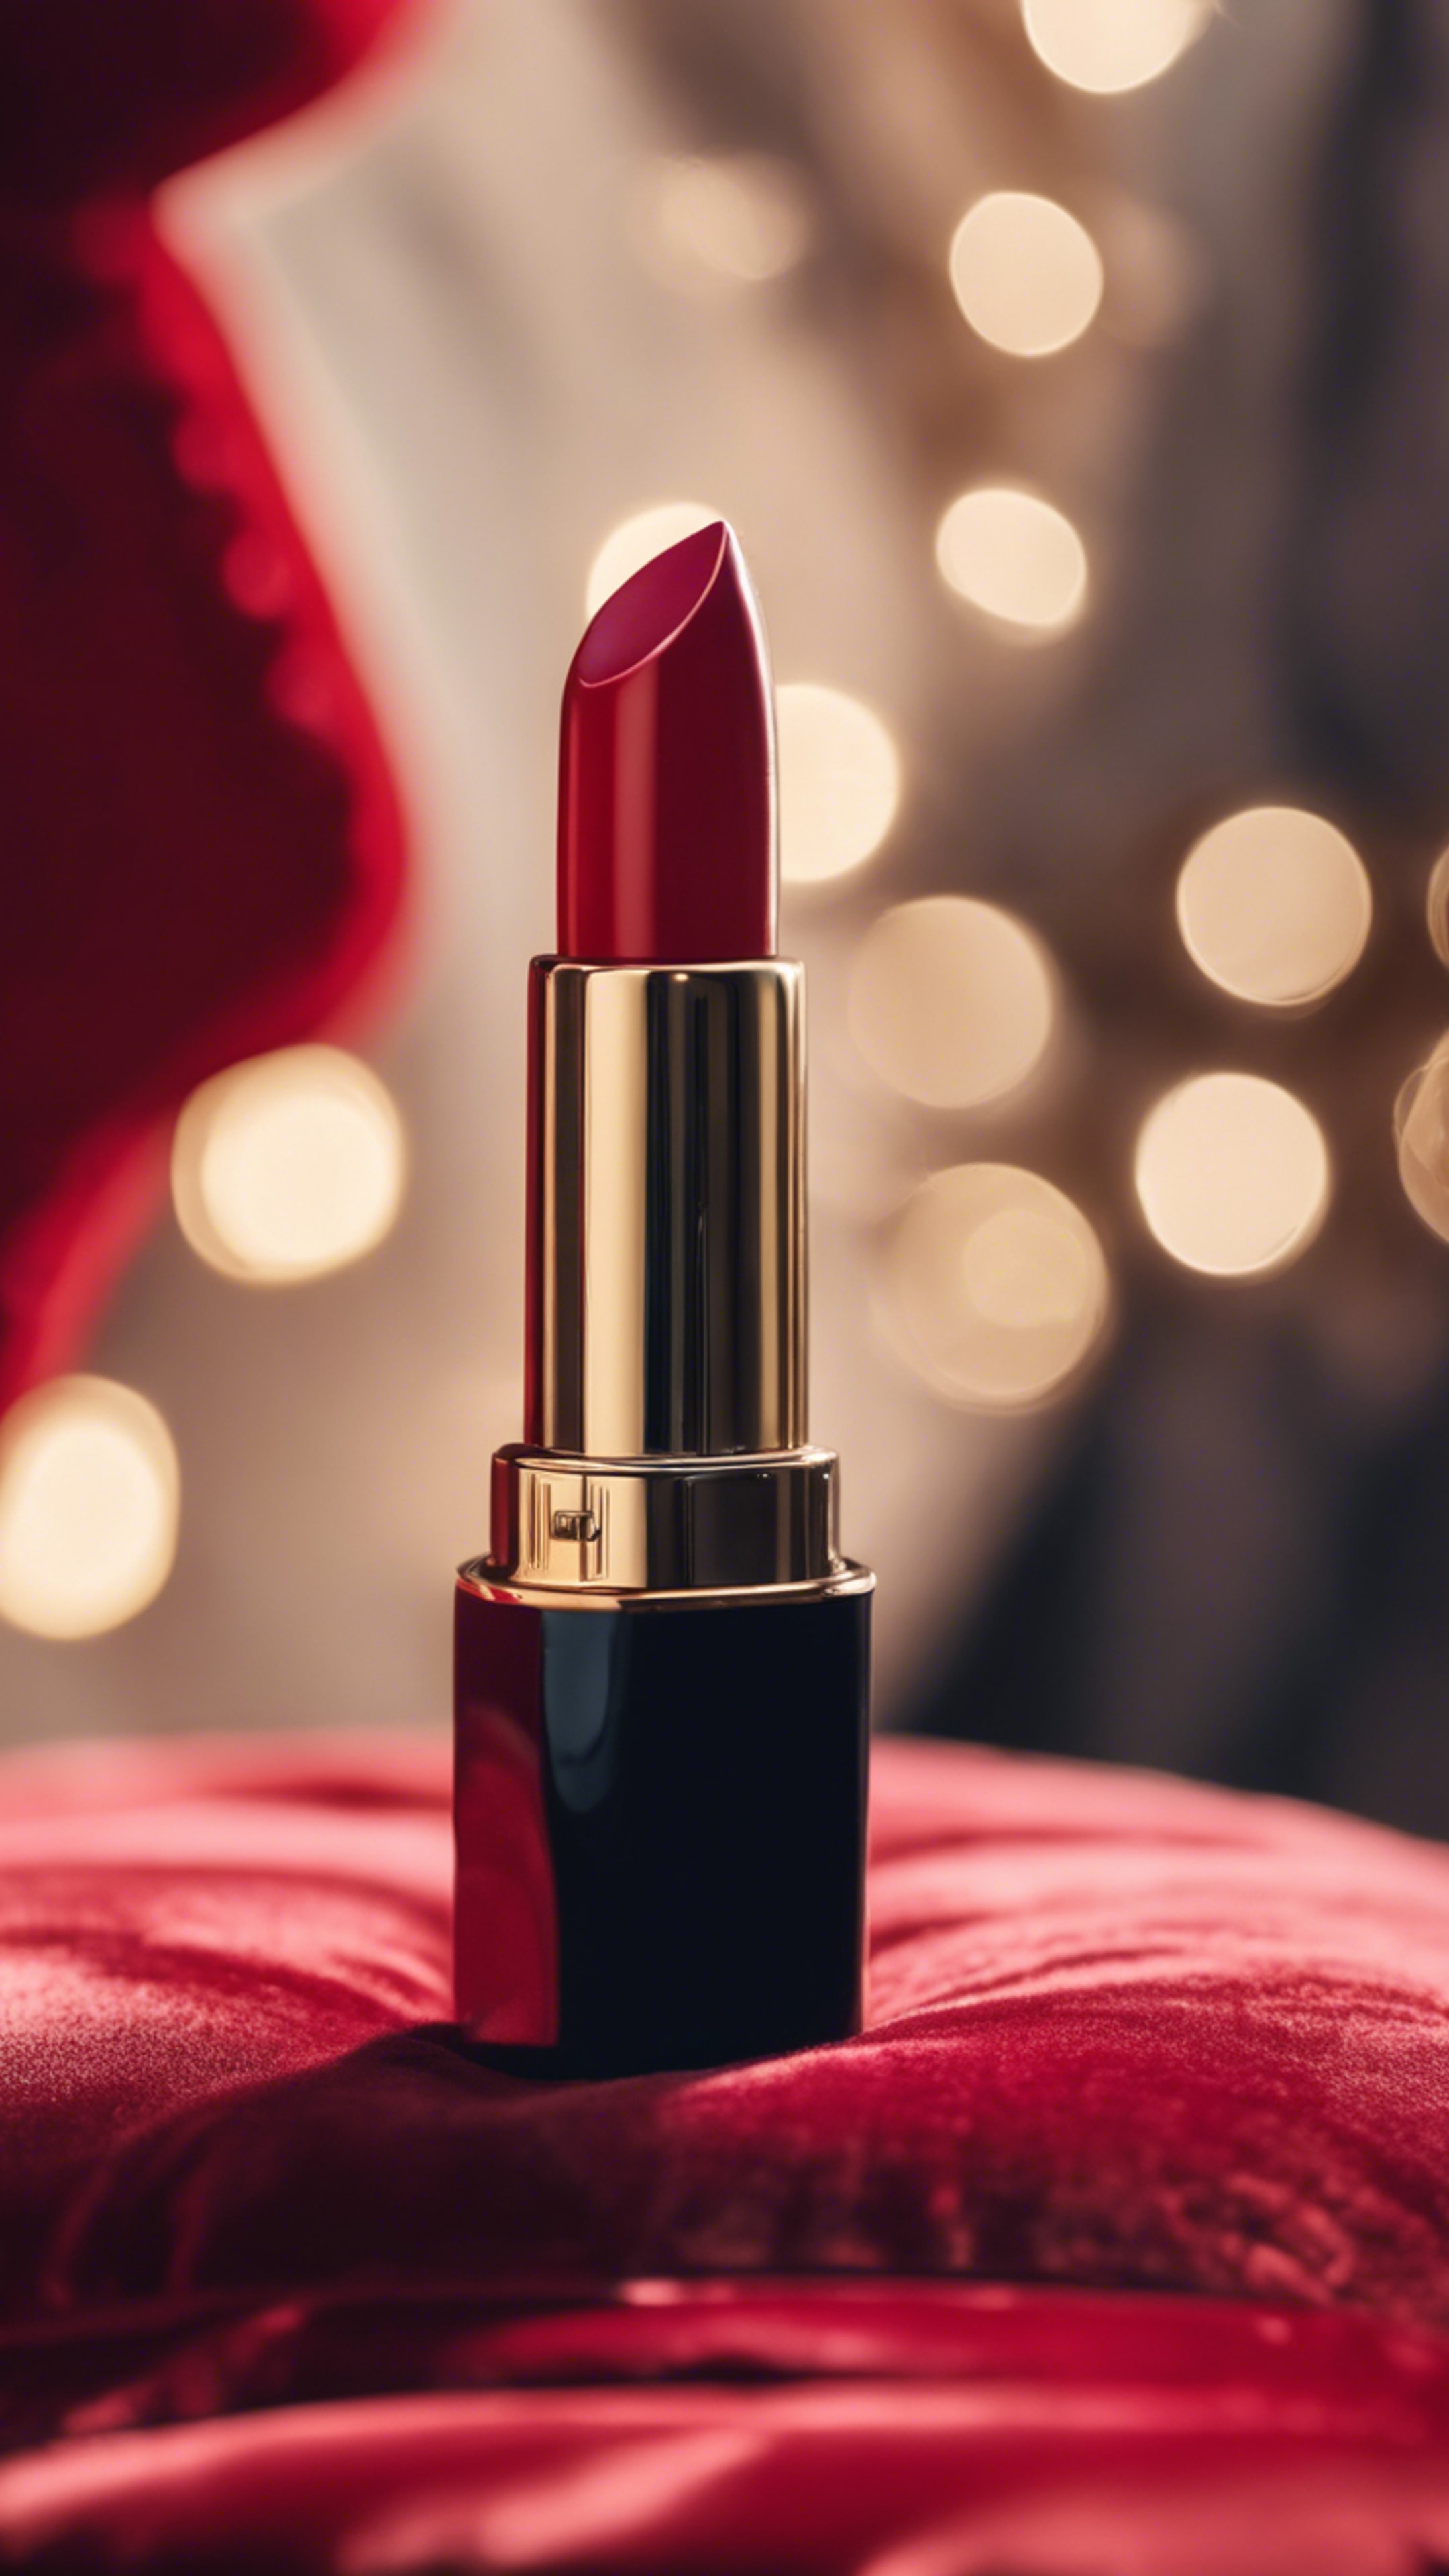 A luxury red lipstick displayed on a plush velvet cushion. Дэлгэцийн зураг[becb77b7269f4dbdb5b5]